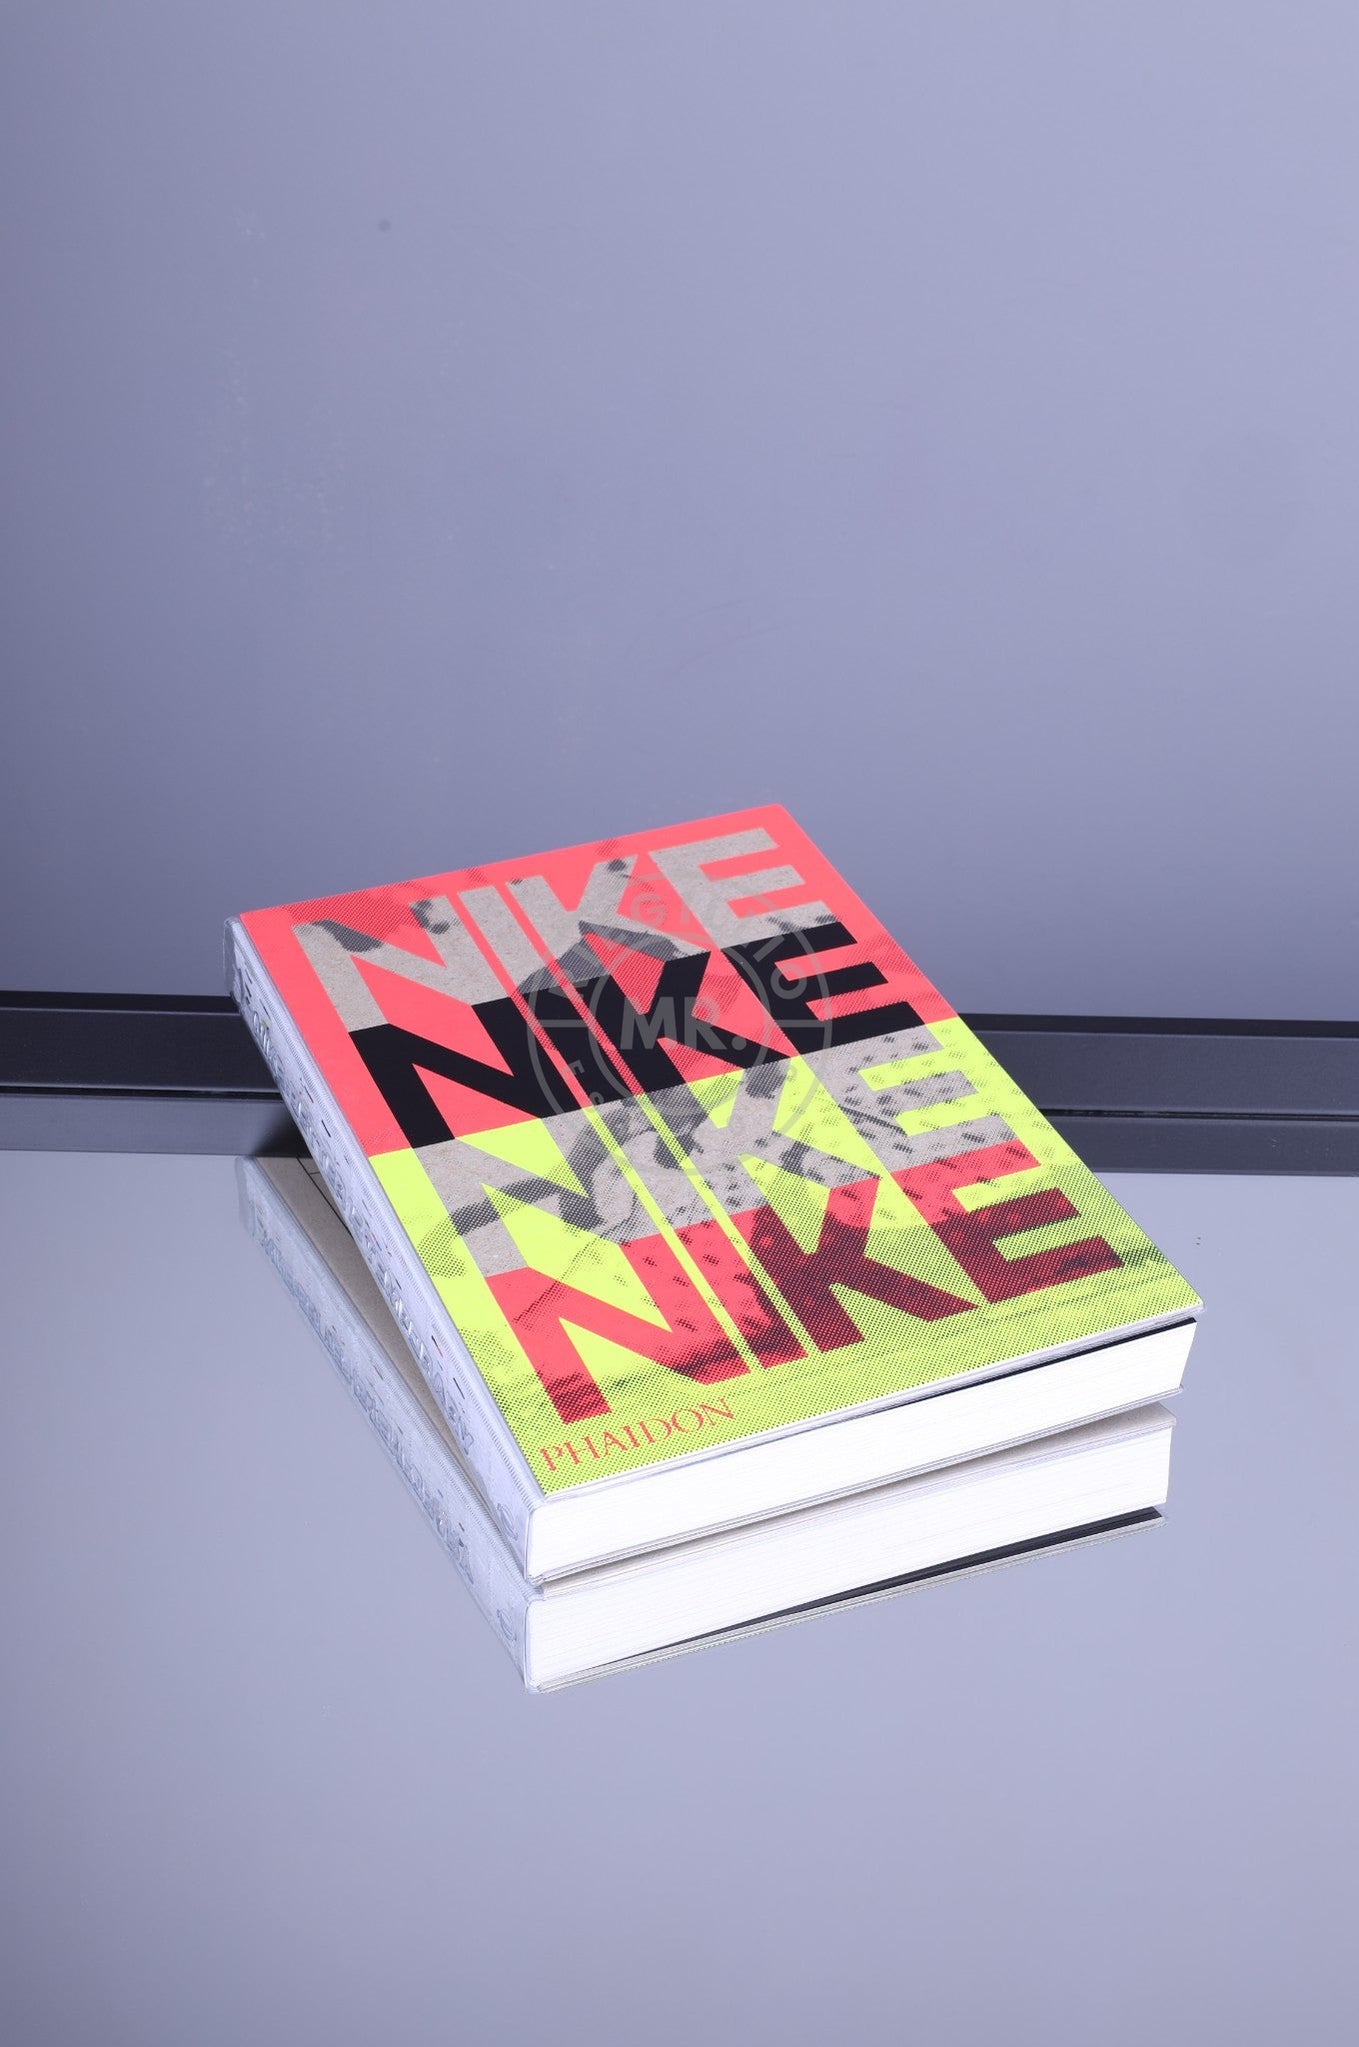 Table Book NIKE Sneakers at MR. Riegillio